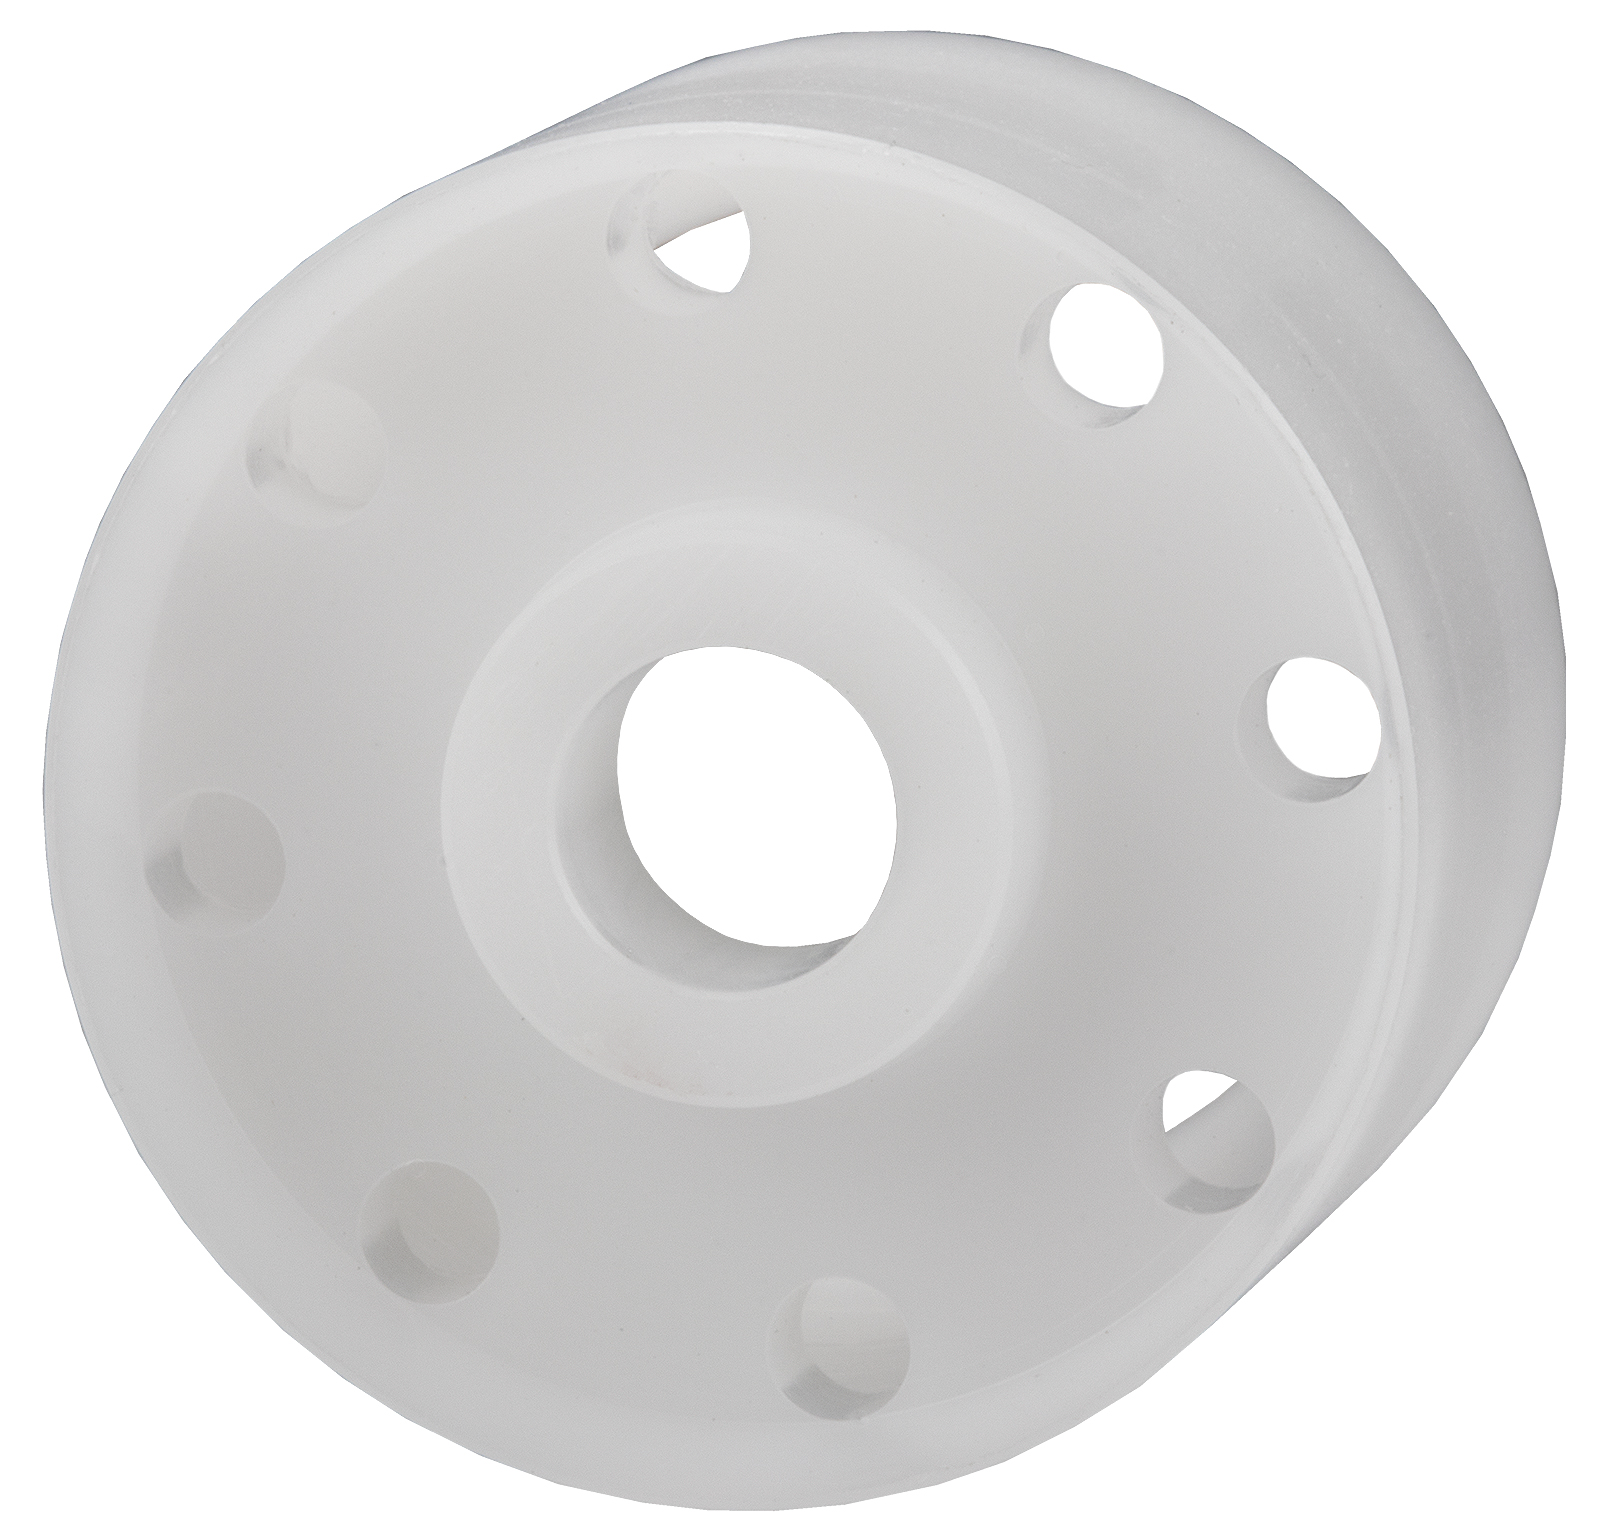 Spinning disk for Rotorspray 24 mm